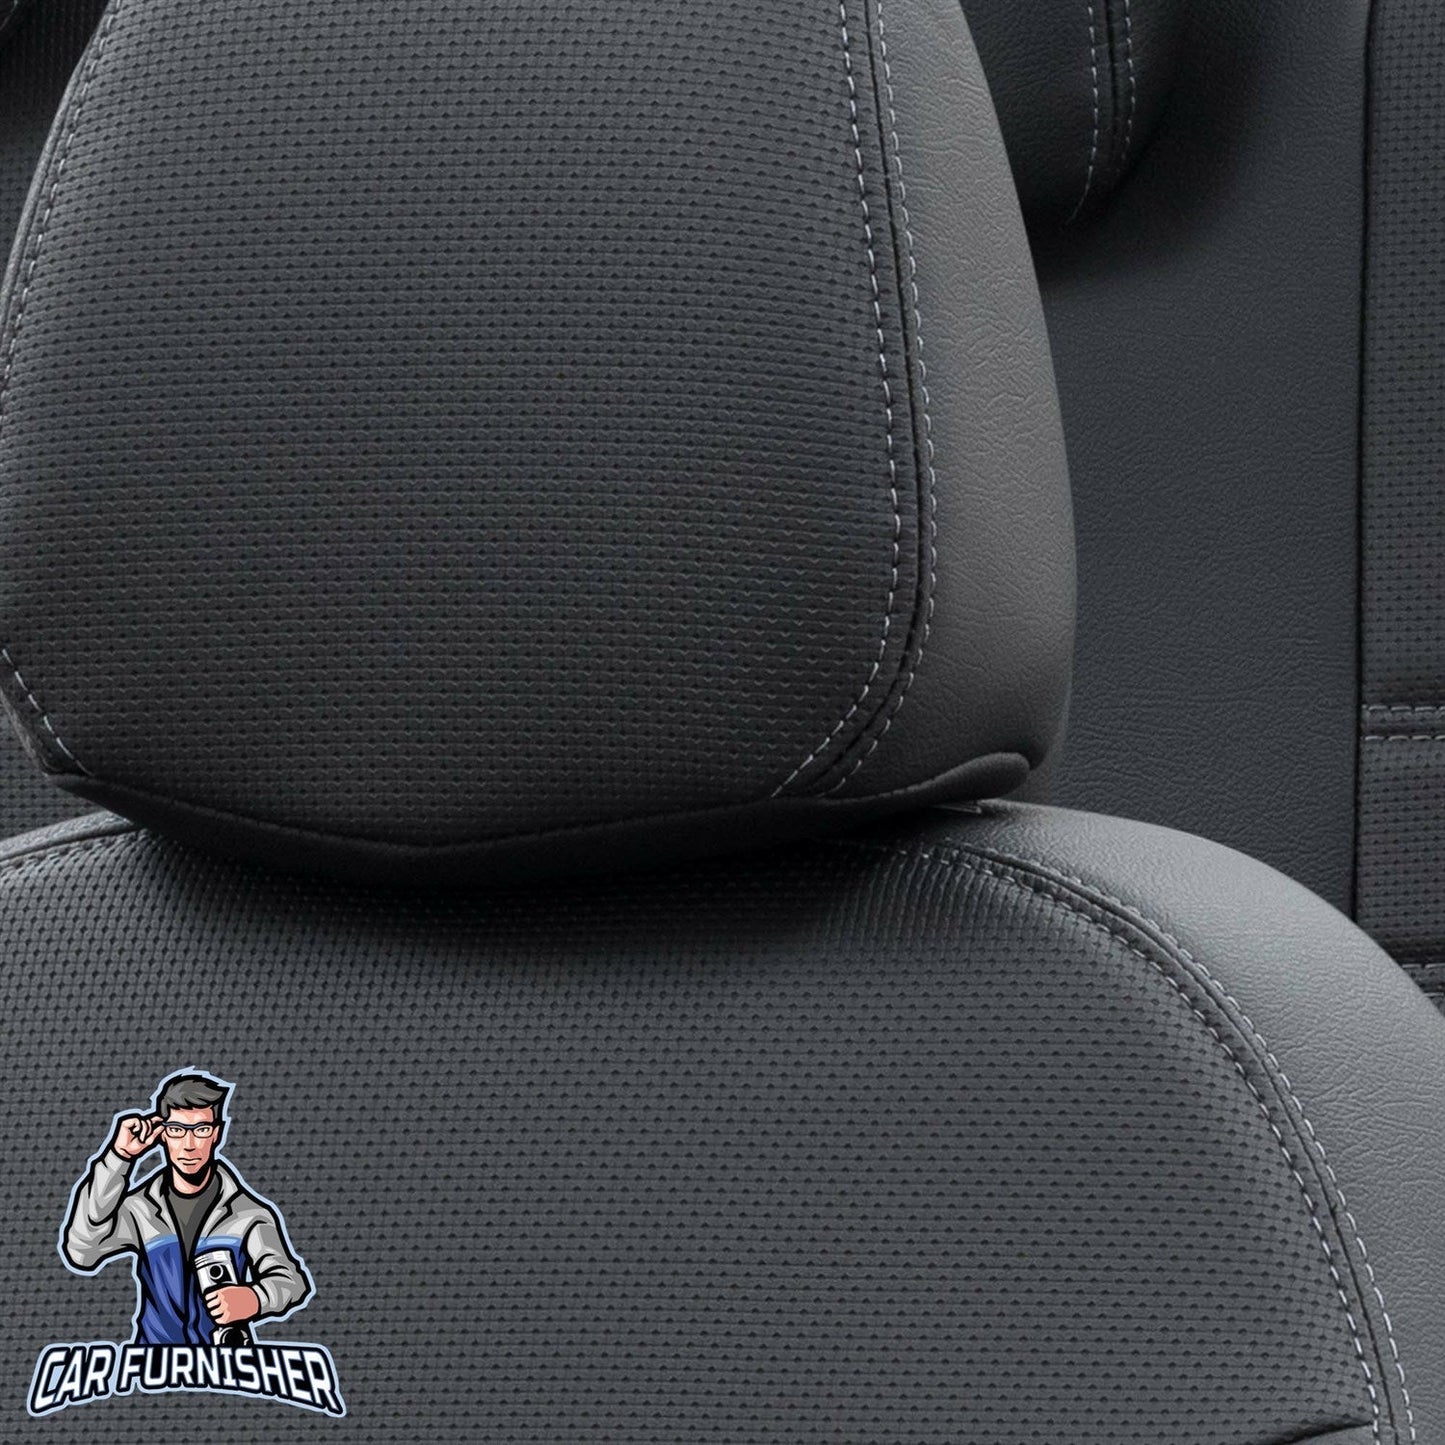 Isuzu Nlr Seat Covers New York Leather Design Black Leather